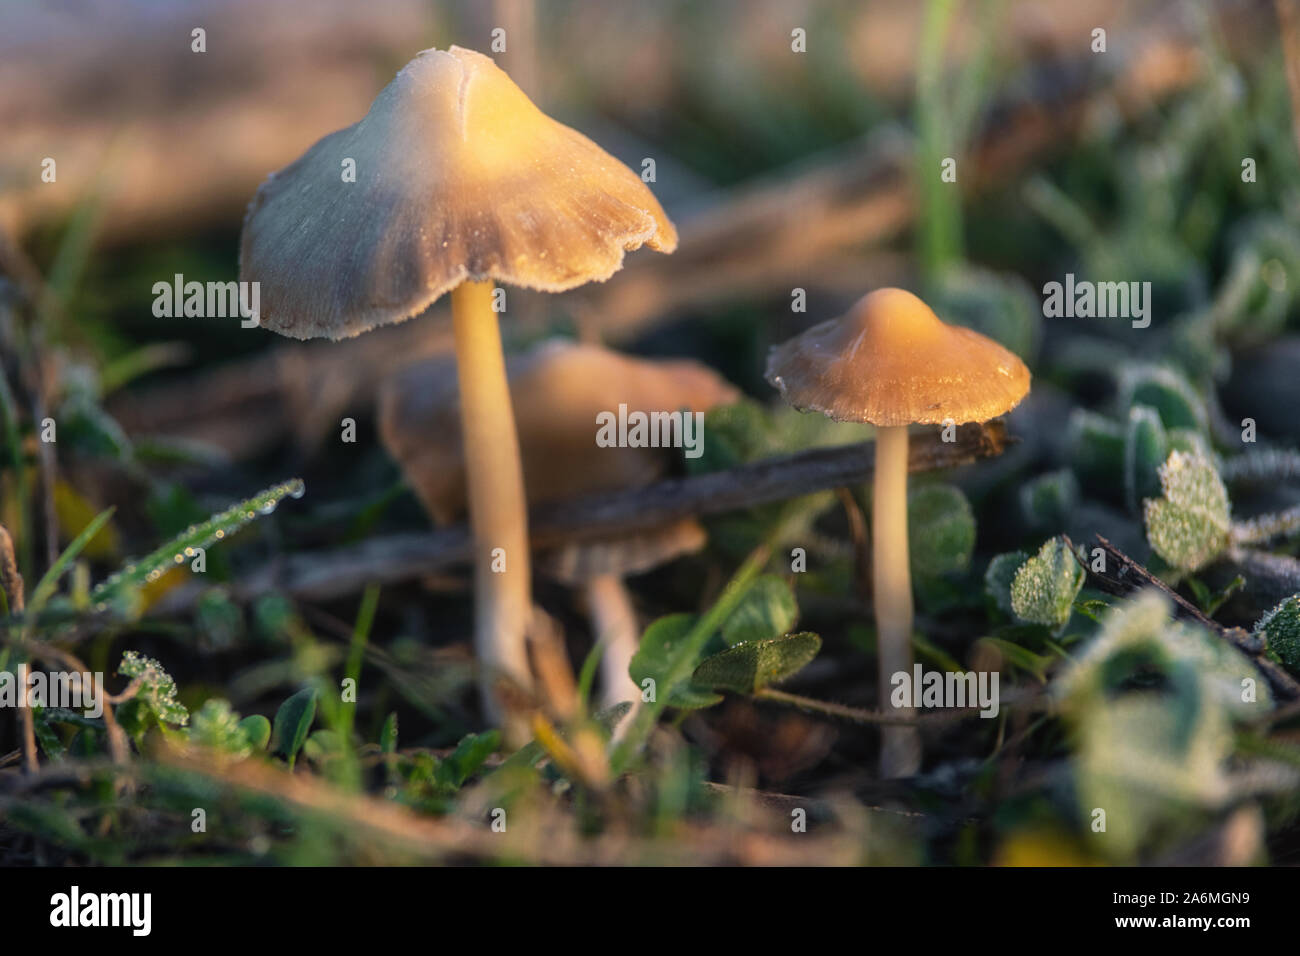 Hallucinogenic Liberty Cap Mushrooms or Psilocybe semilanceata in the green grass background close up . Stock Photo